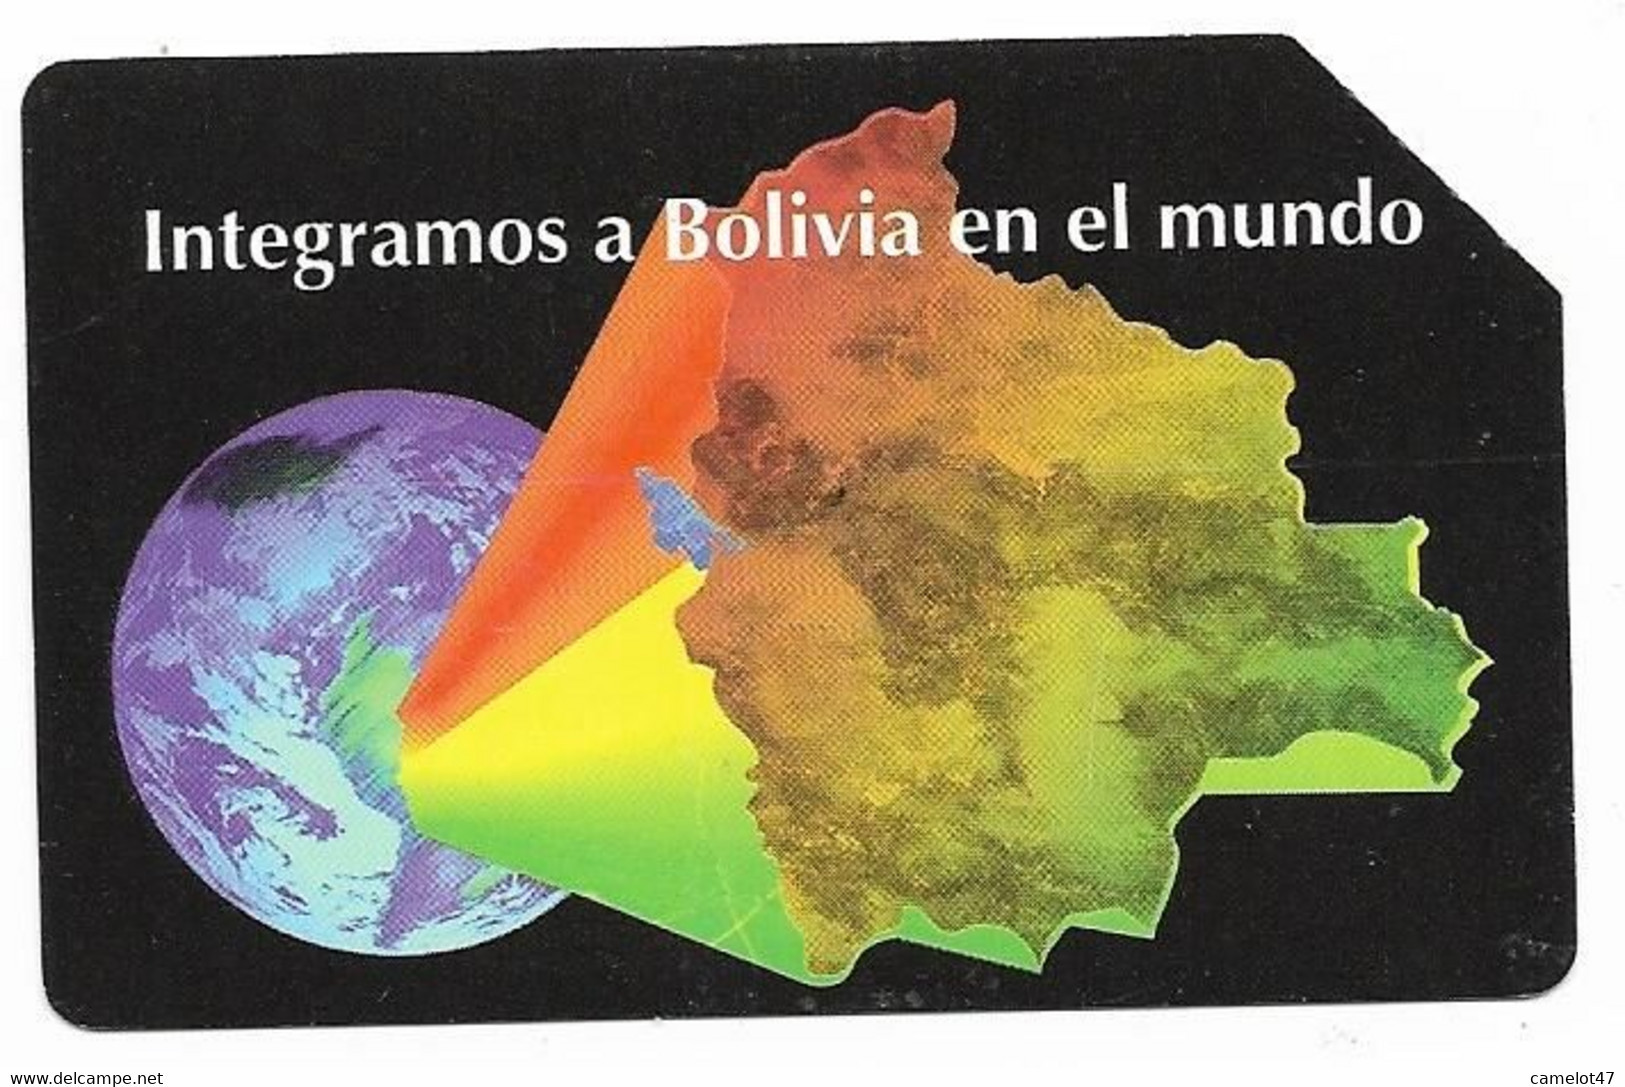 Bolivia, Entel, Urmet Used Phone Card, No Value, Collectors Item, # Bolivia-34 - Bolivia